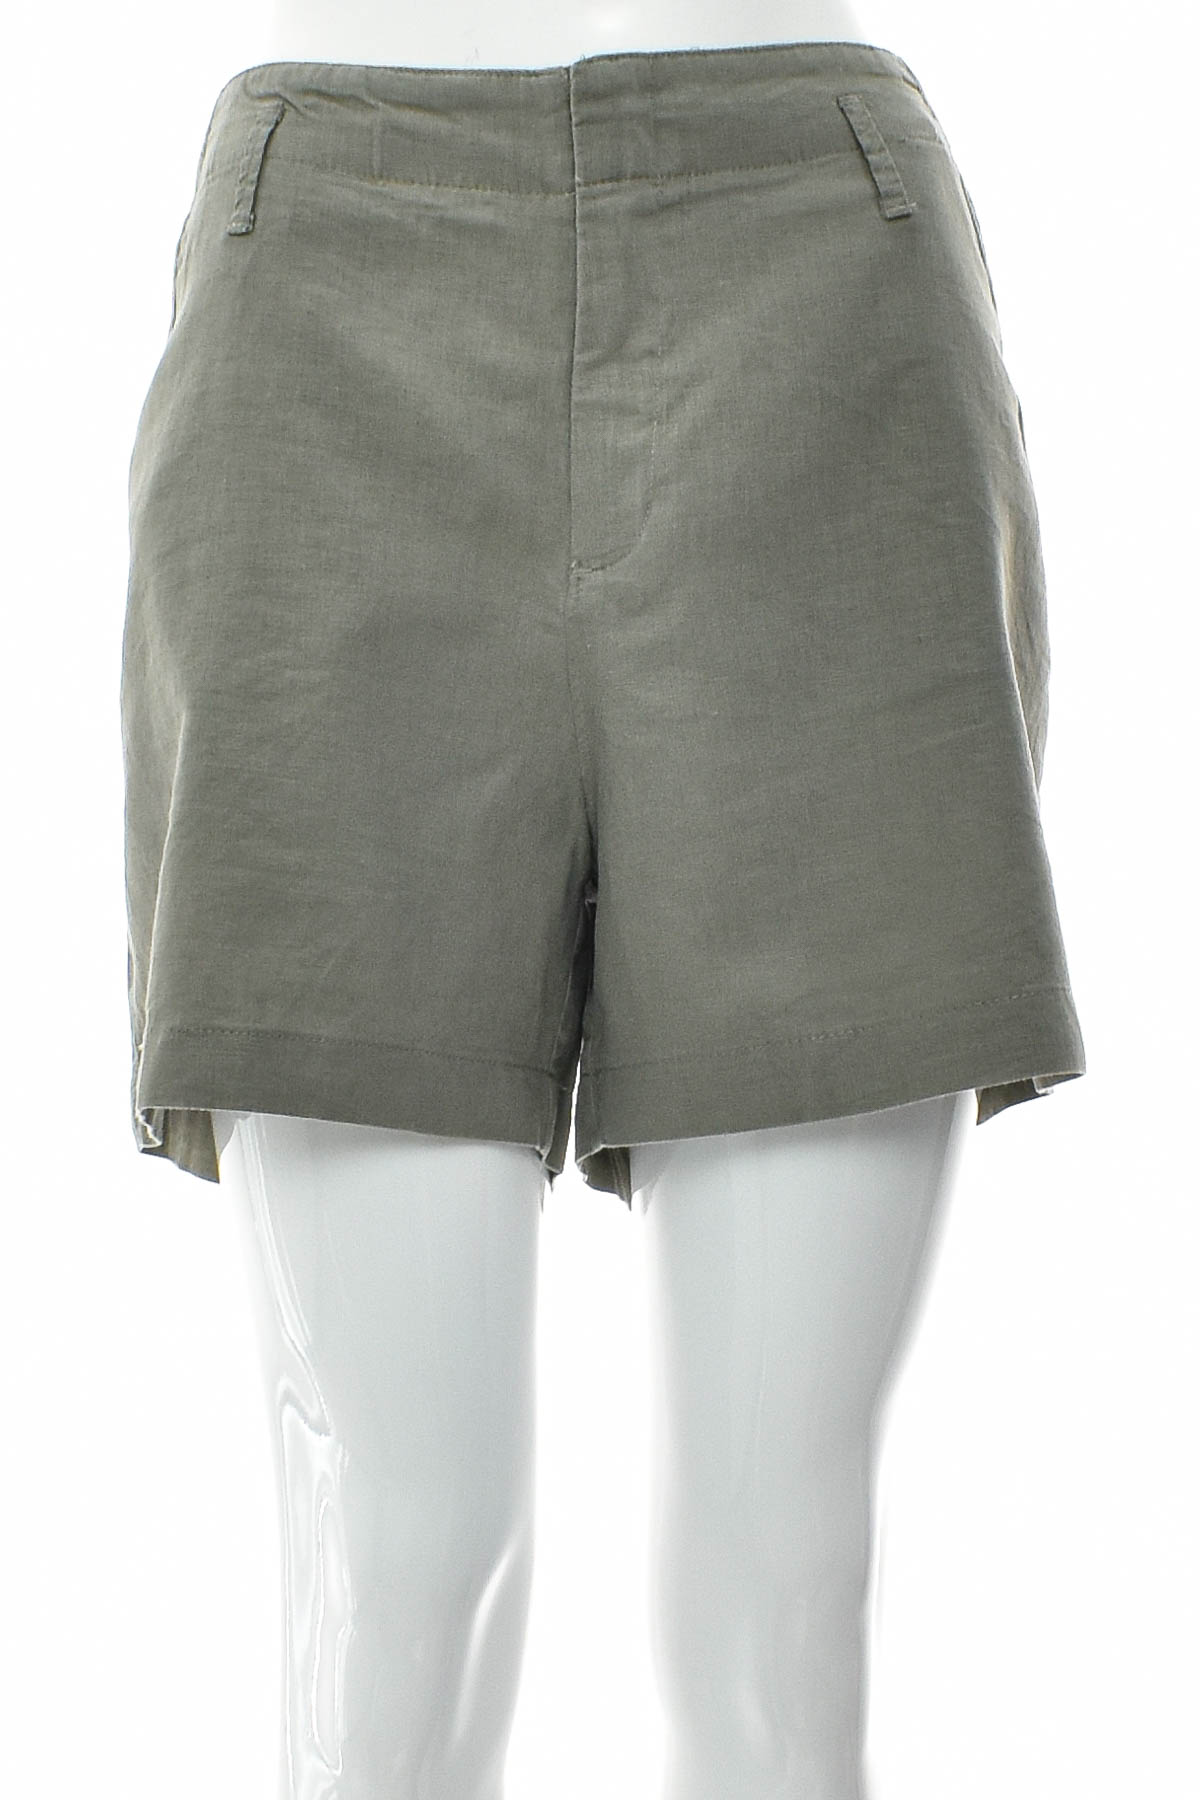 Female shorts - My Own - 0